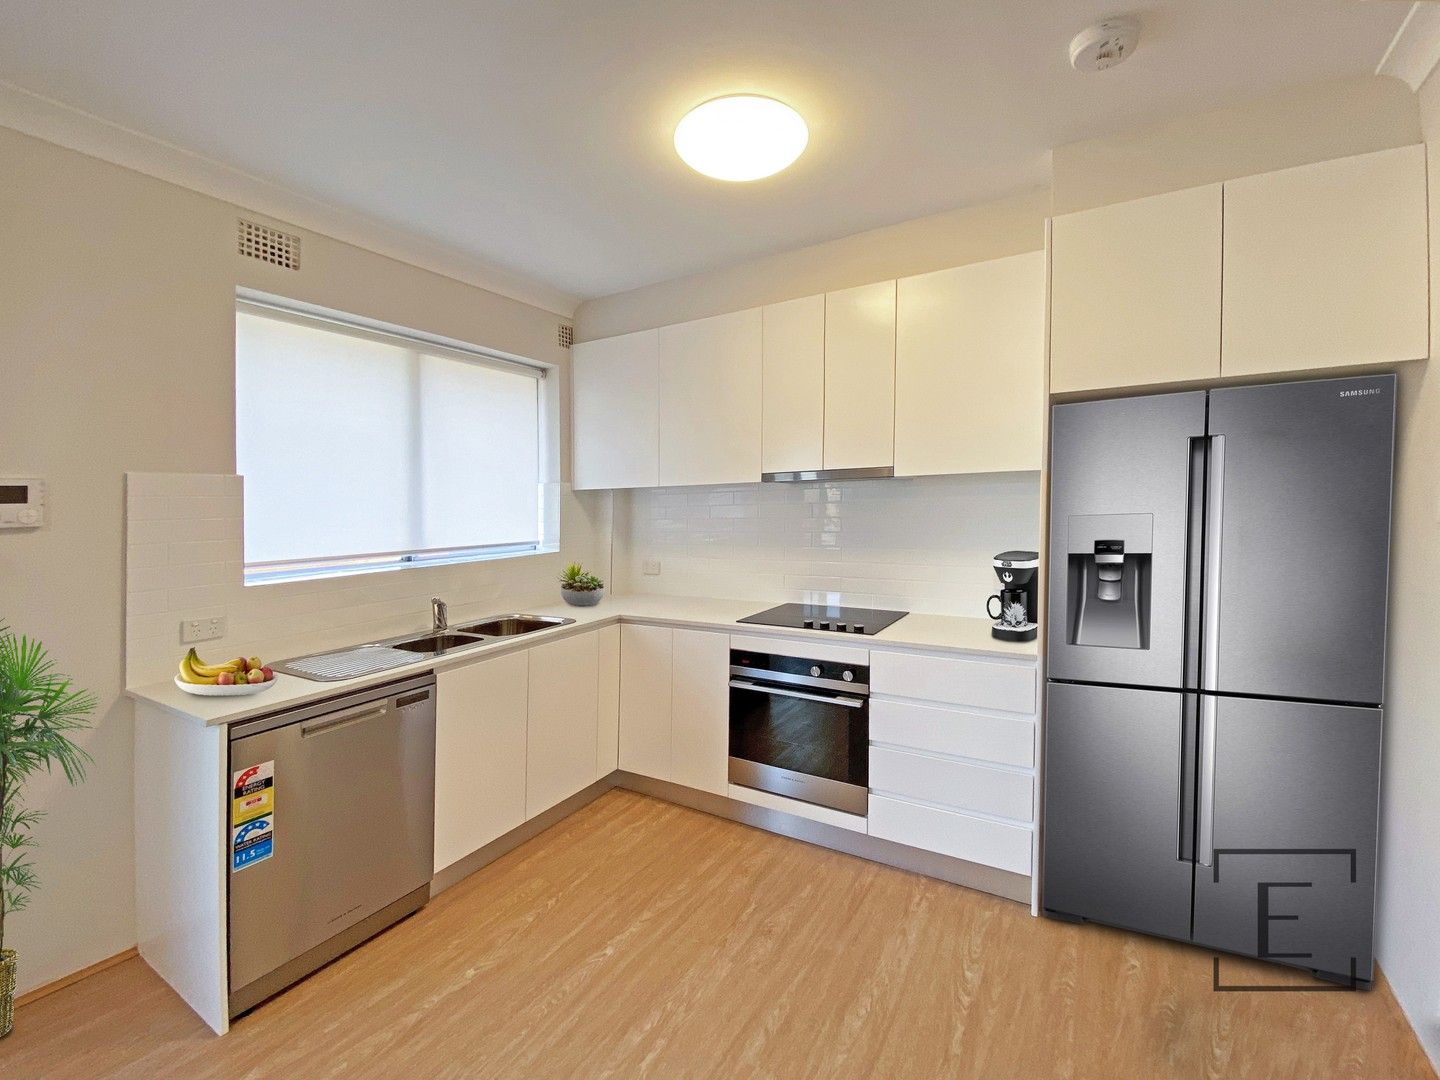 2 bedrooms Apartment / Unit / Flat in 2 / 2 Macintosh street Mascot MASCOT NSW, 2020